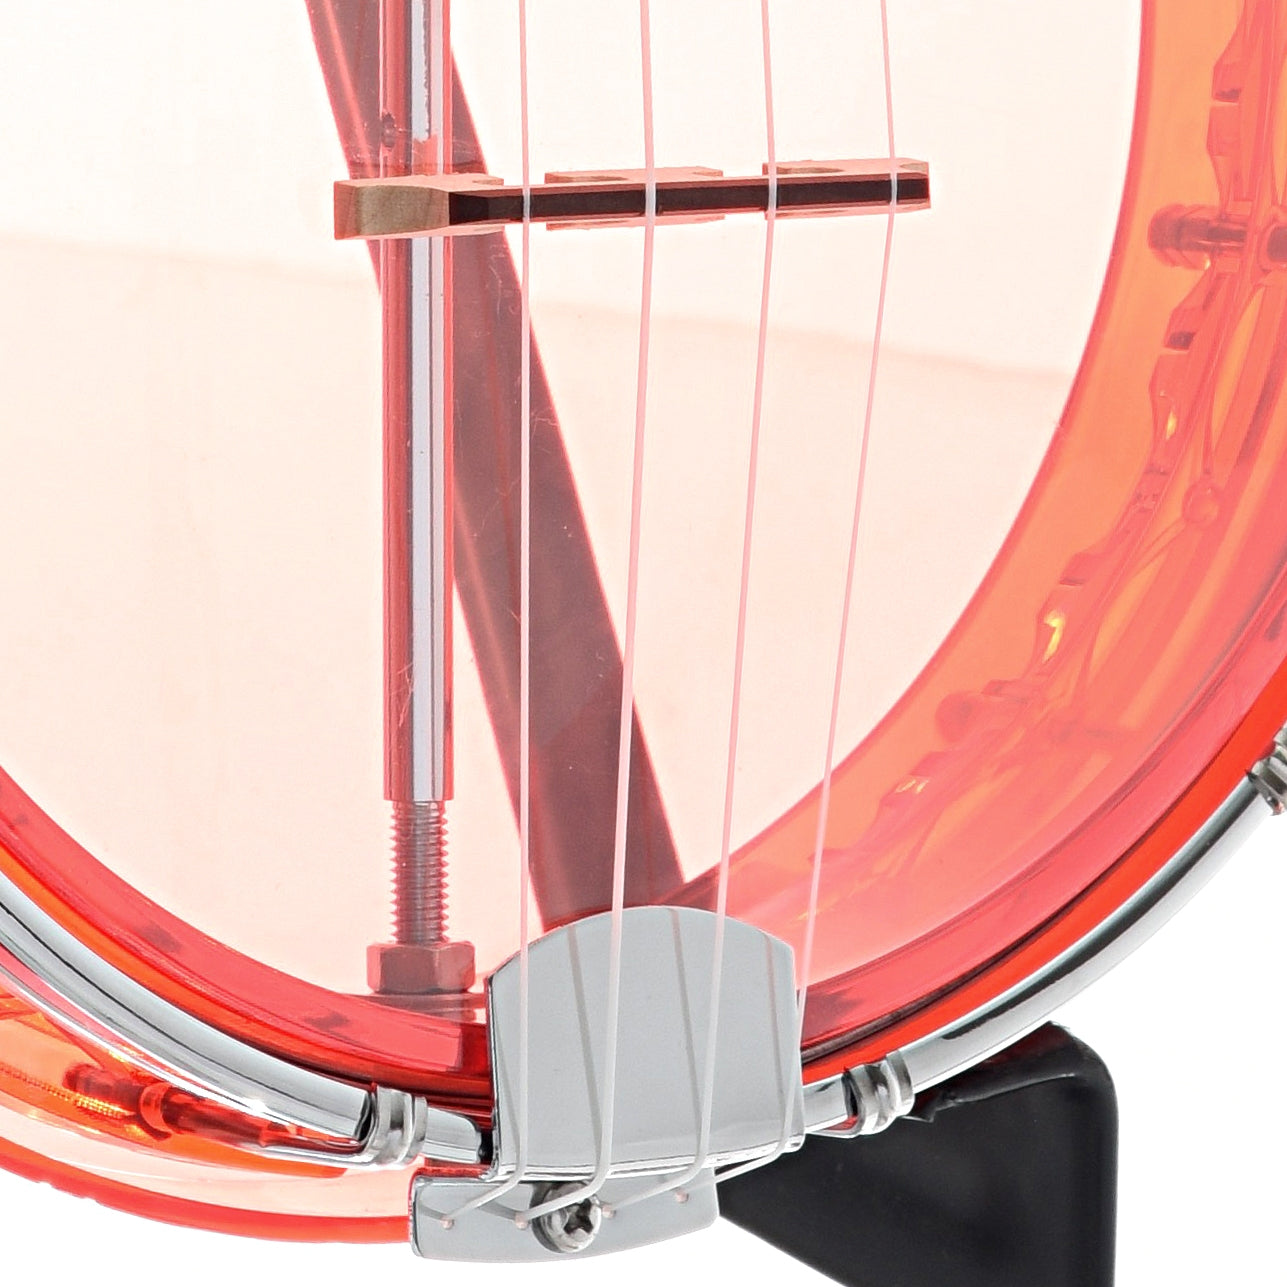 Image 3 of Gold Tone Little Gem Banjo Ukulele & Gigbag, Ruby (red) - SKU# LGEM-RED : Product Type Banjo Ukuleles : Elderly Instruments